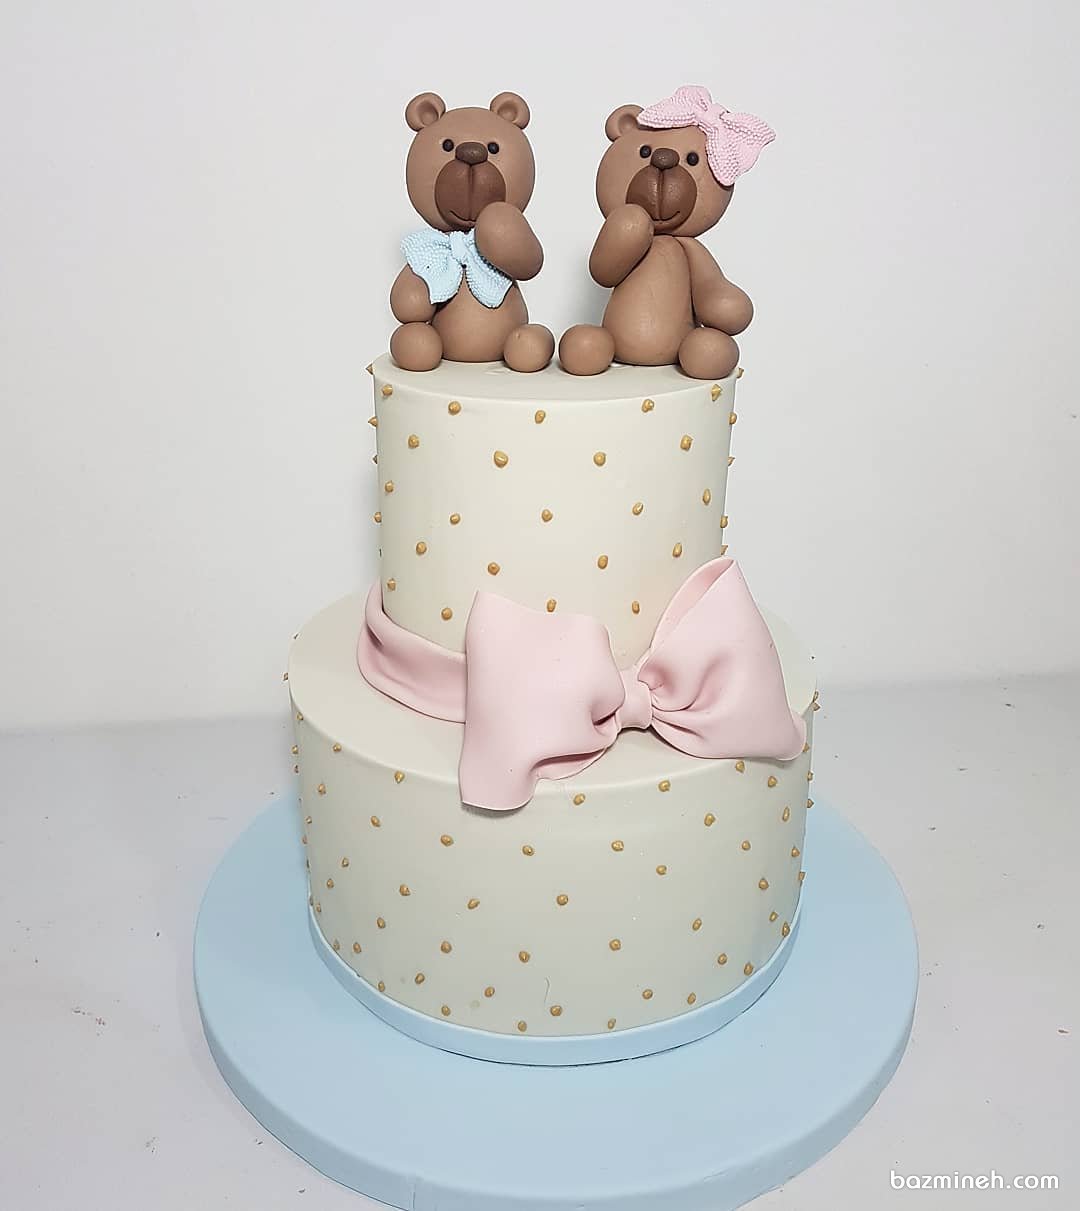 کیک دو طبقه جشن بیبی شاور یا تعیین جنسیت با تم خرس تدی